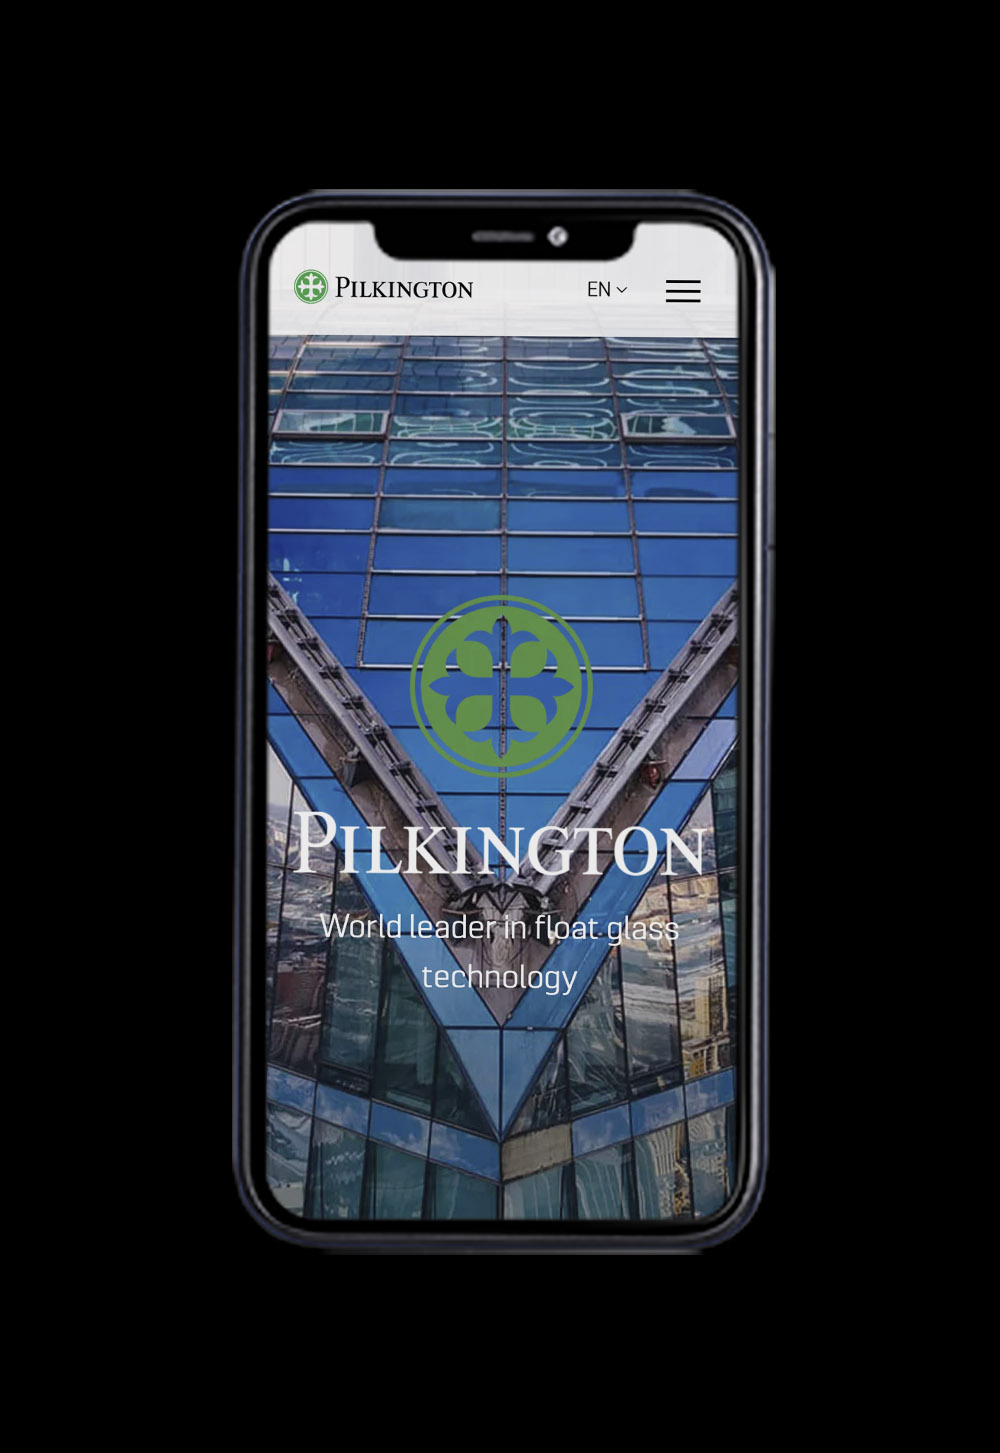 pilkington website - image 1